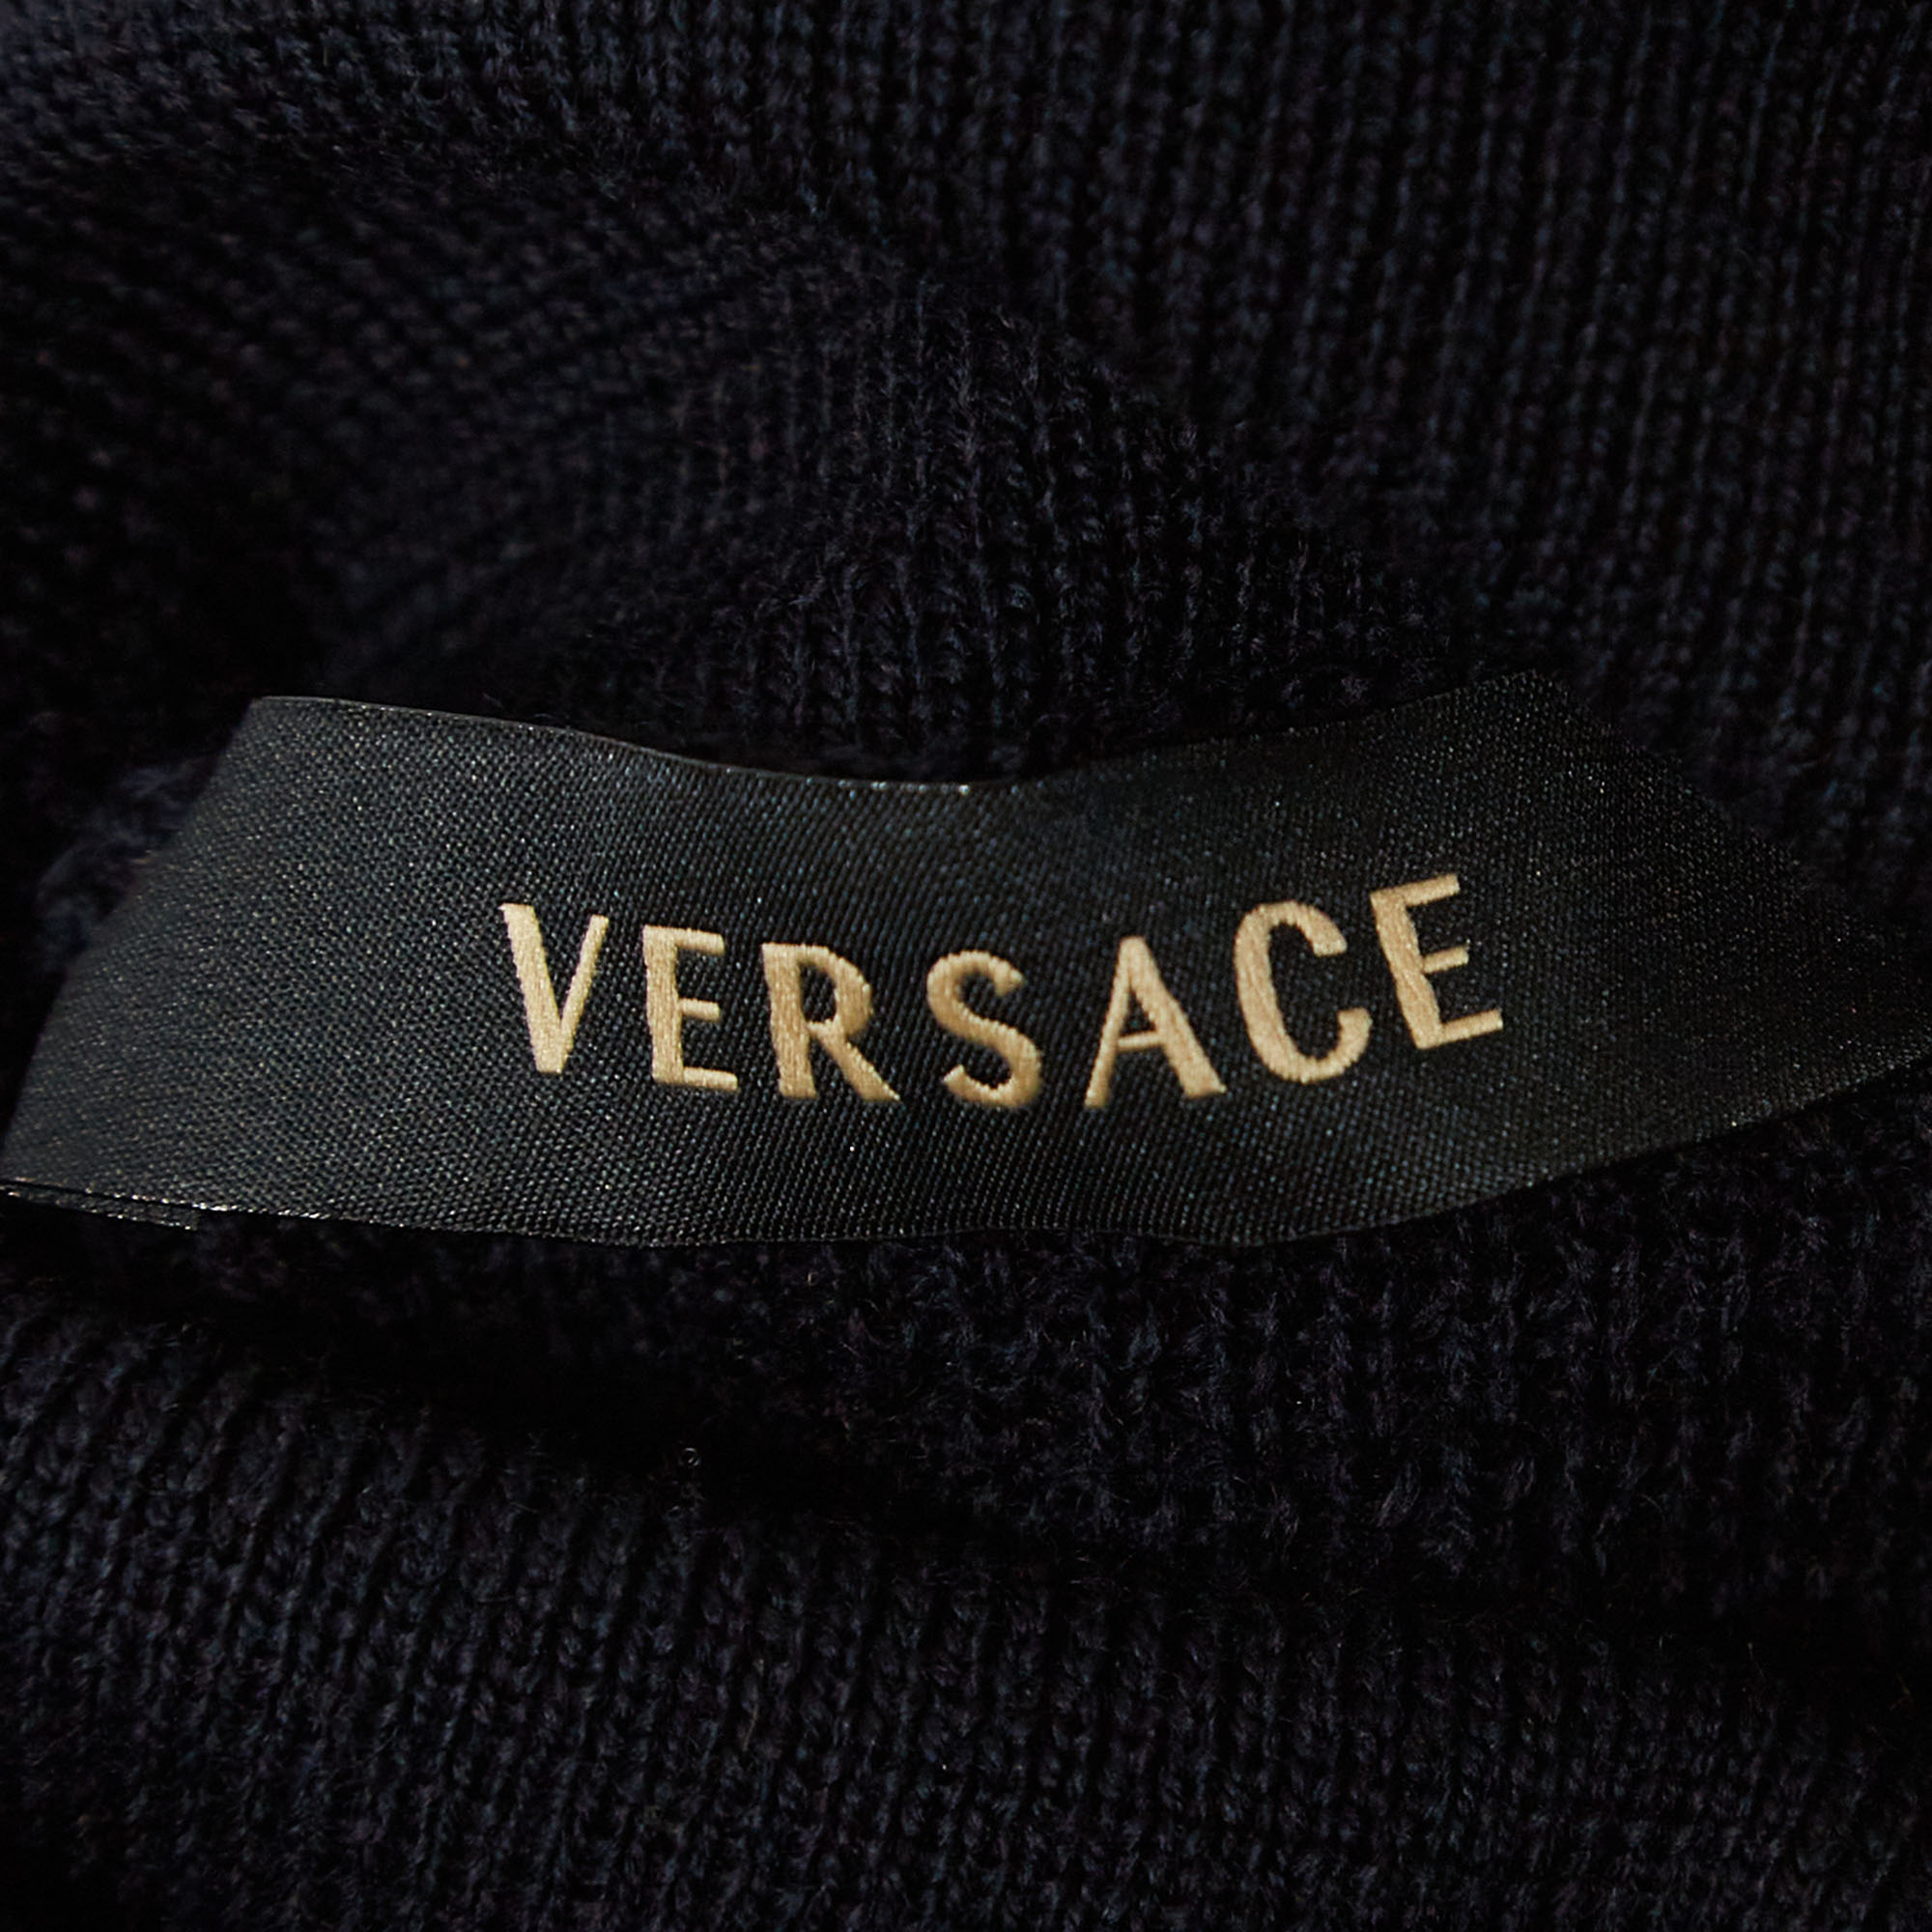 Versace Navy Blue Wool Knit Turtle Neck Long Sleeve Top M